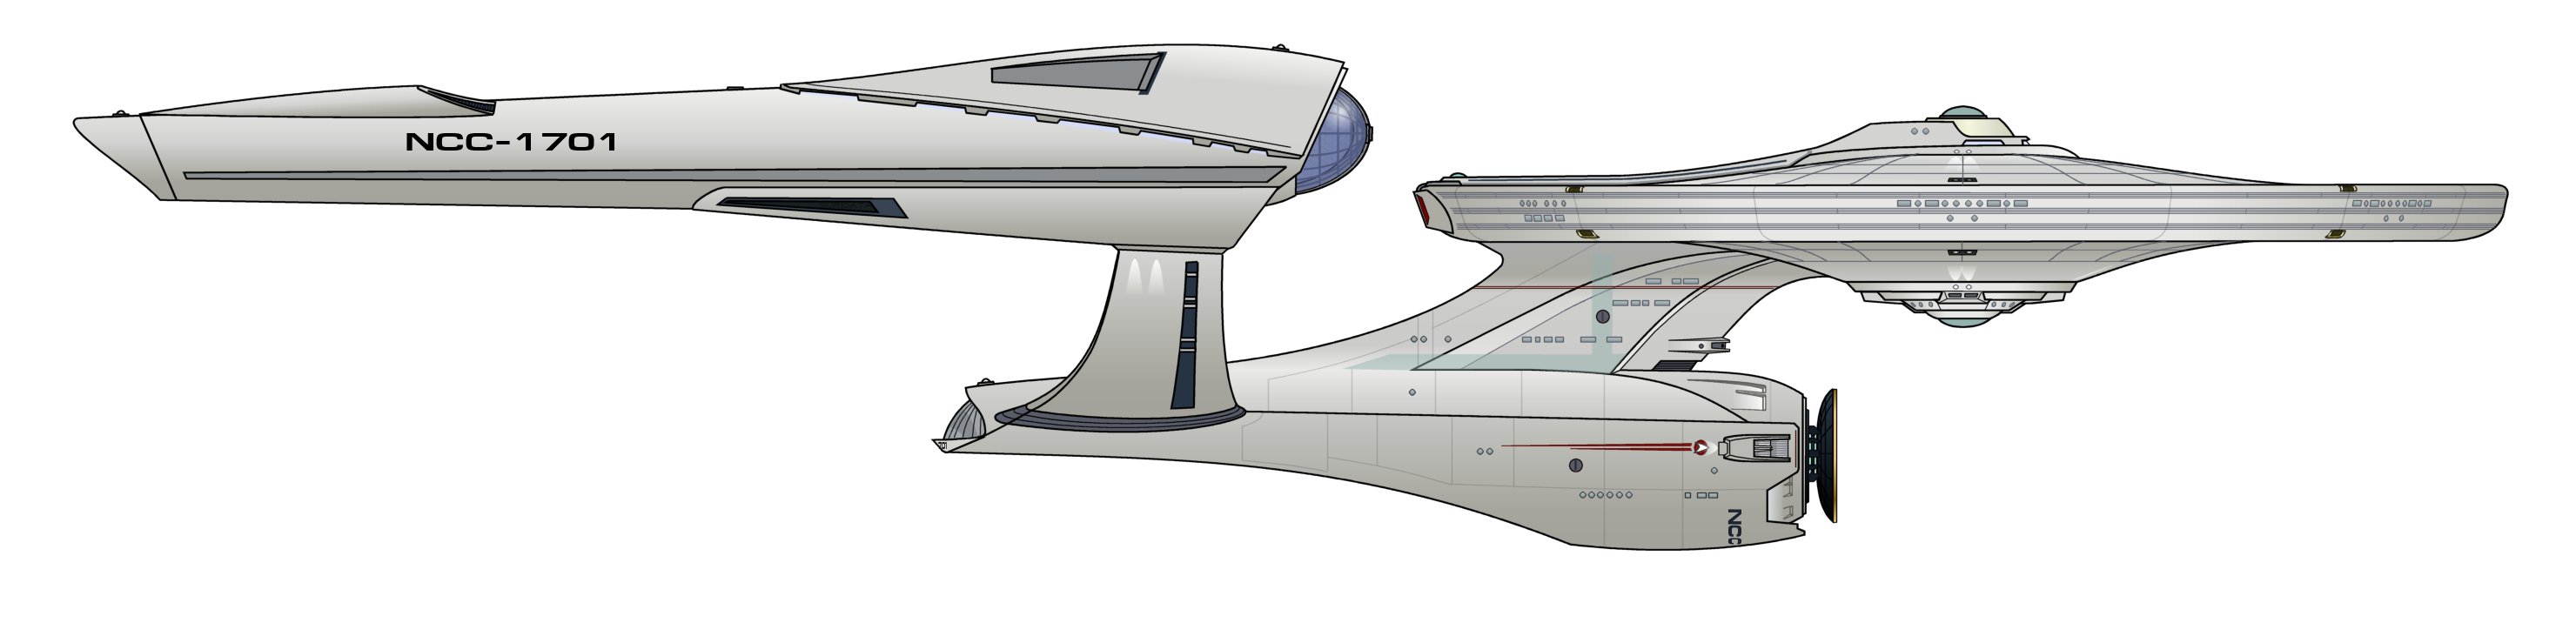 enterprise-suricata.jpg